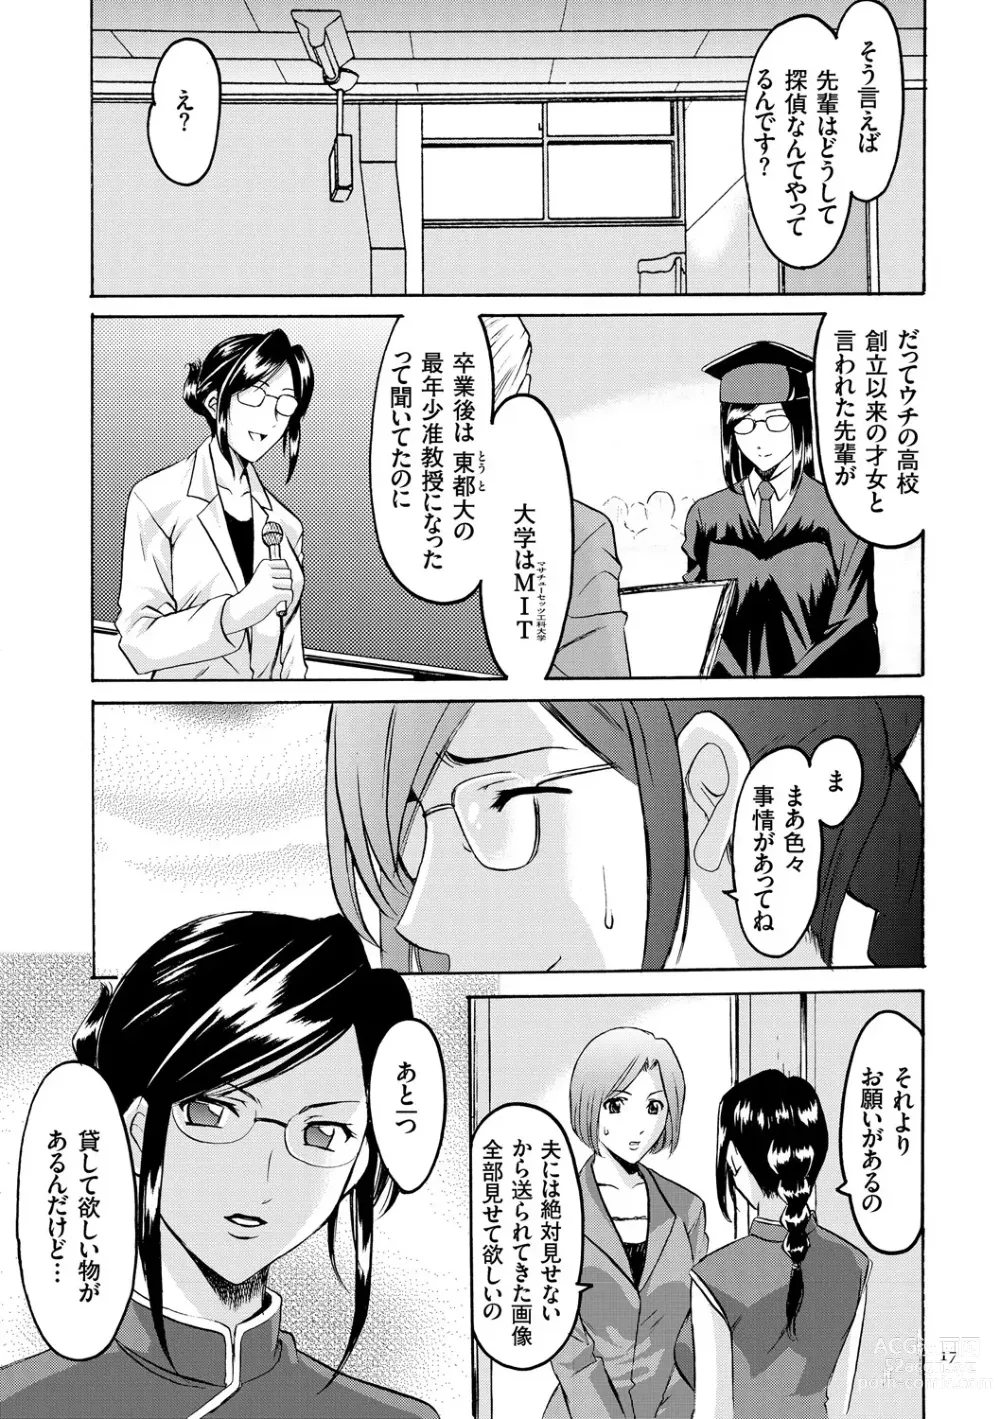 Page 17 of manga Sennyu Tsuma Satomi Kiroku